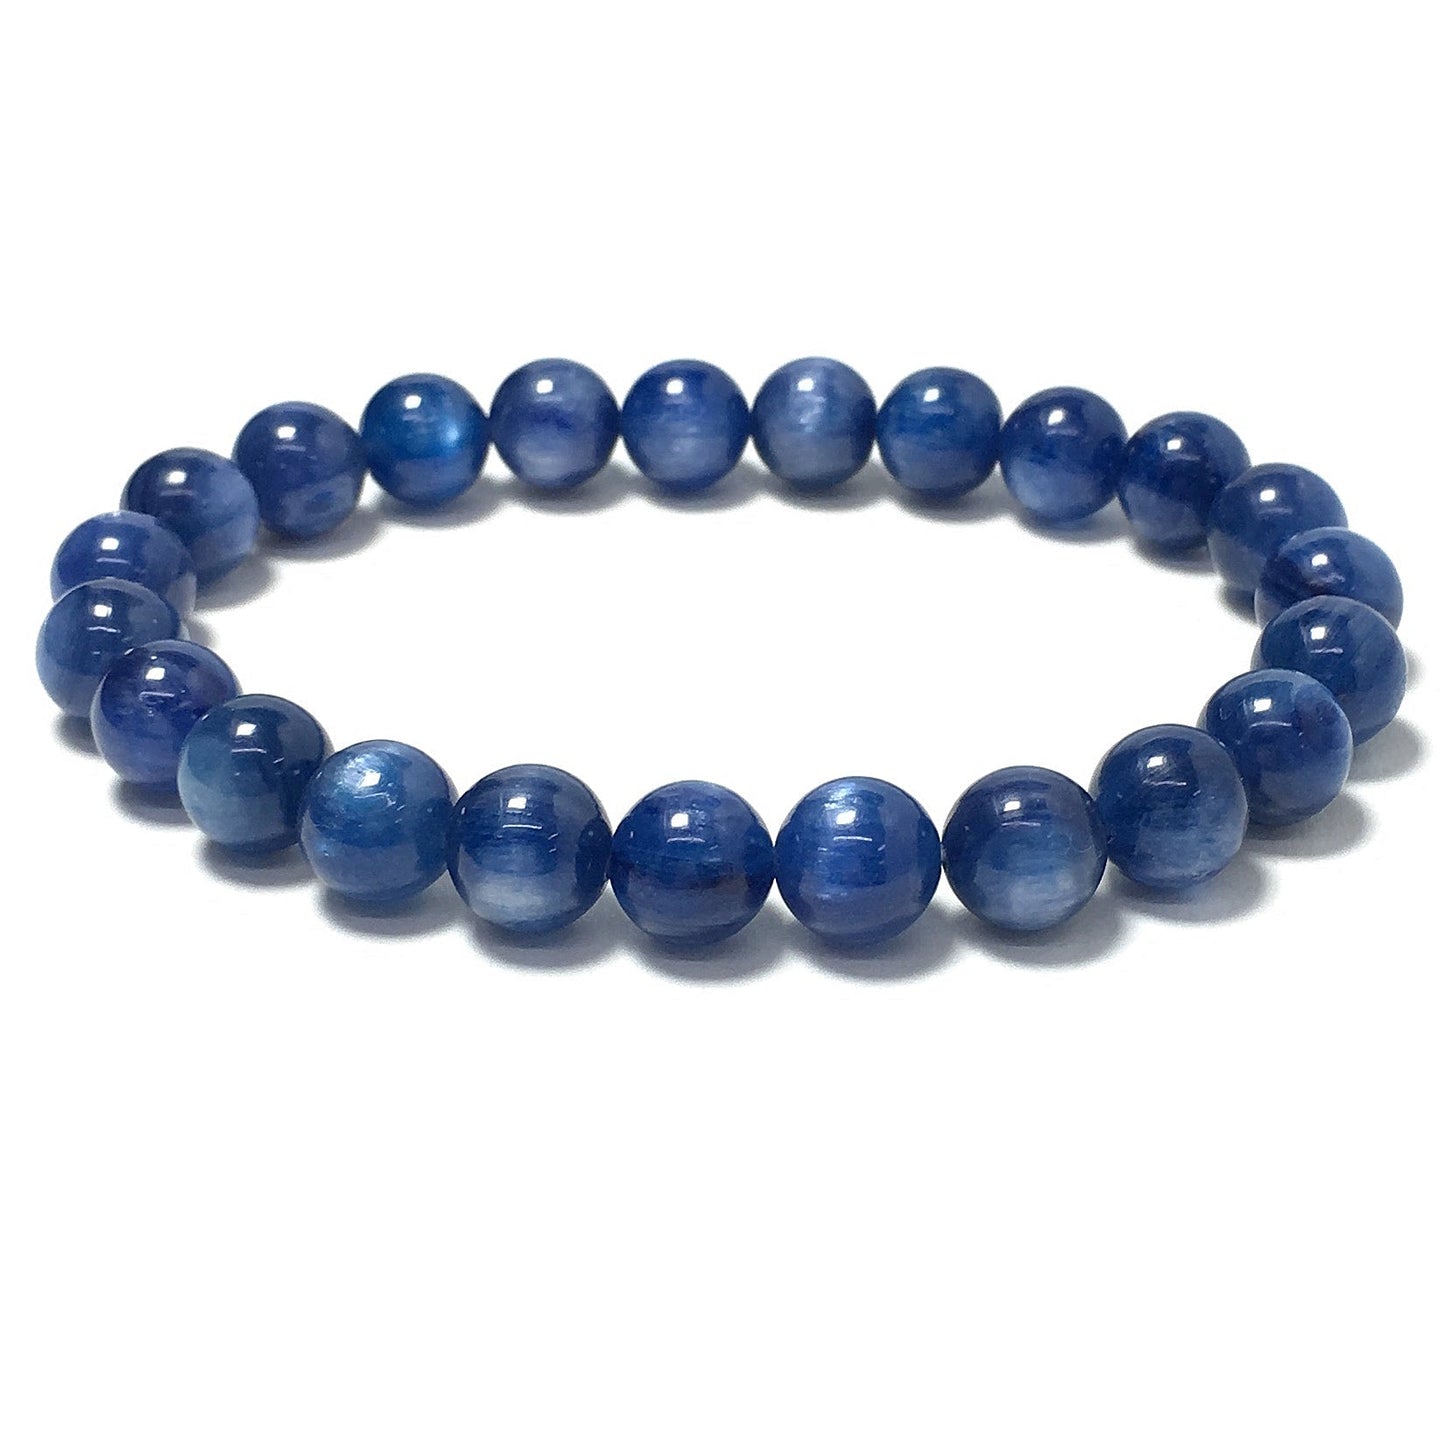 Kyantie Gemstone Crystal Healing Stretch Beads Bracelet